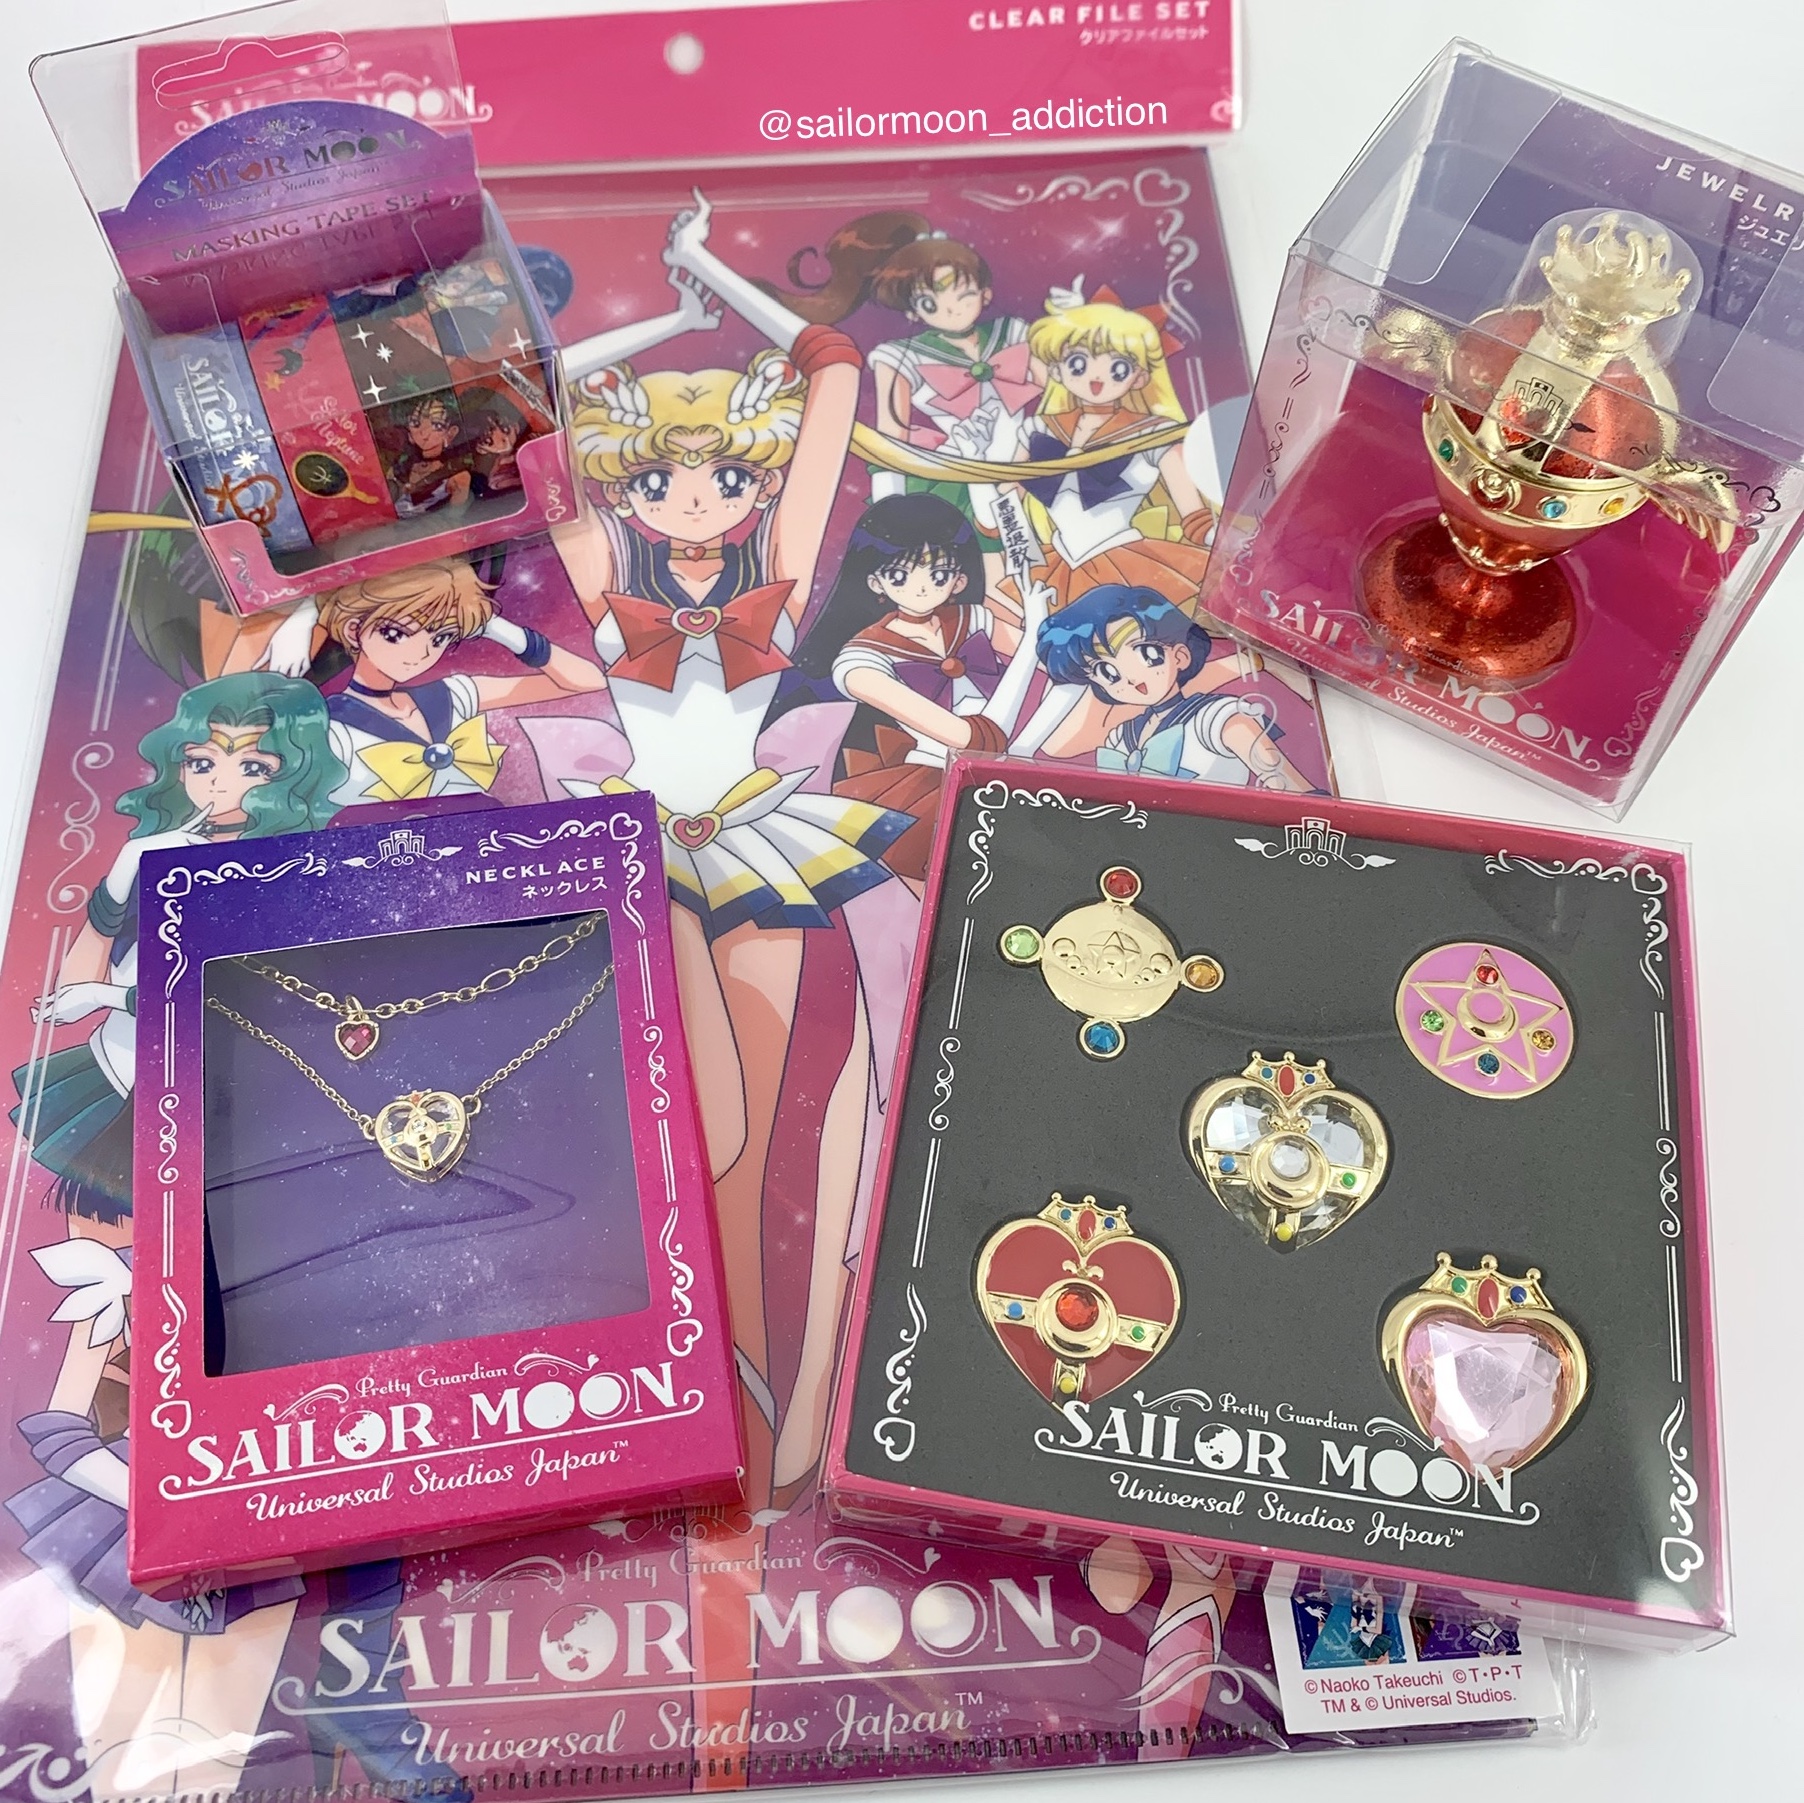 Sailor Moon X Universal Studios Japan 19 Haul Review Part V Sailor Moon Addiction